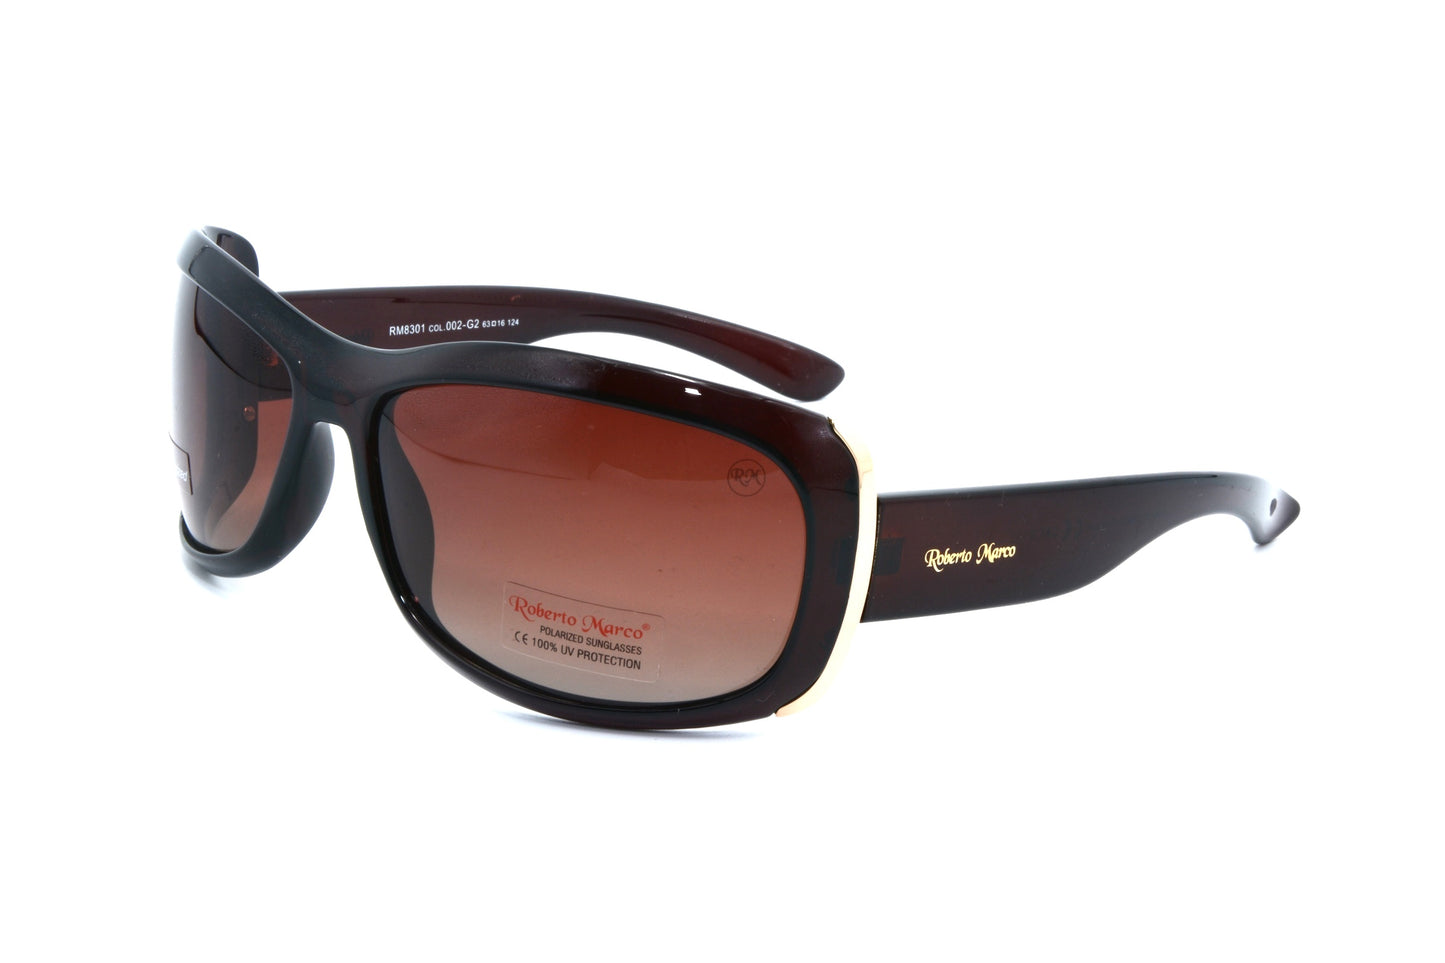 Roberto Marco sunglasses RM8301 002-G2